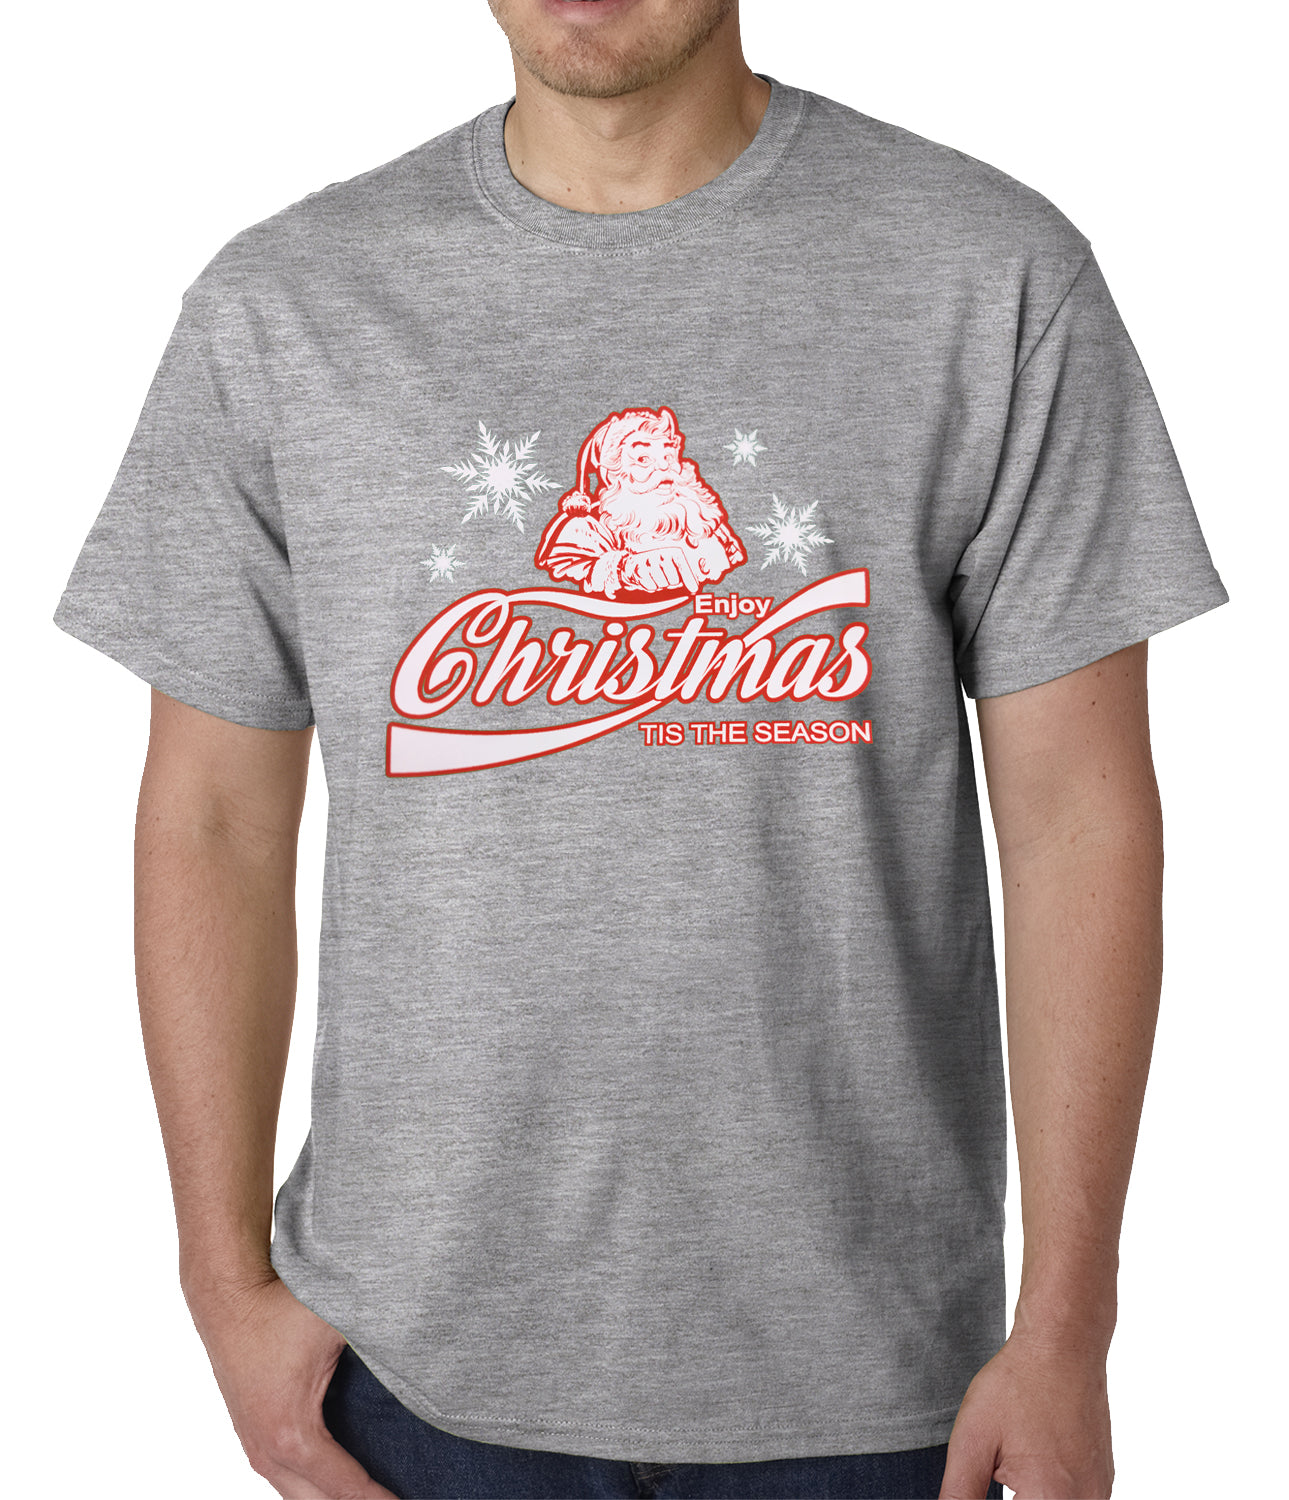 Enjoy Christmas Tis The Season Mens T-shirt